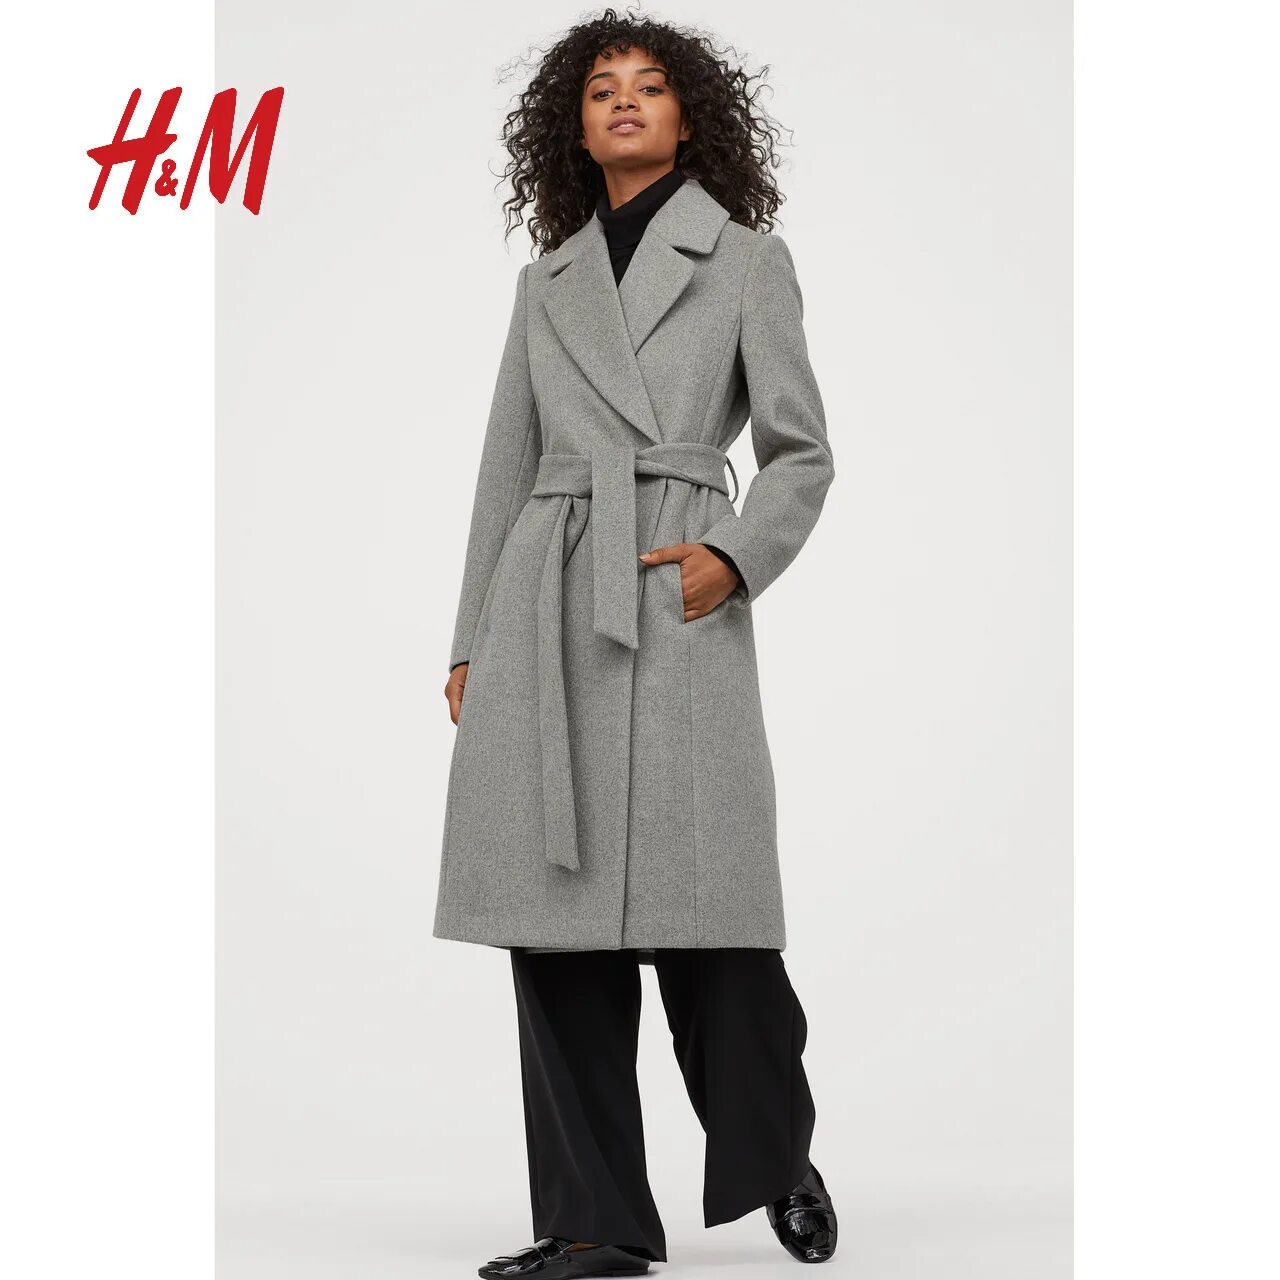 HM Wool Blend пальто. Пальто HM 108780. Пальто из смесовой шерсти HM. Пальто HM женское.